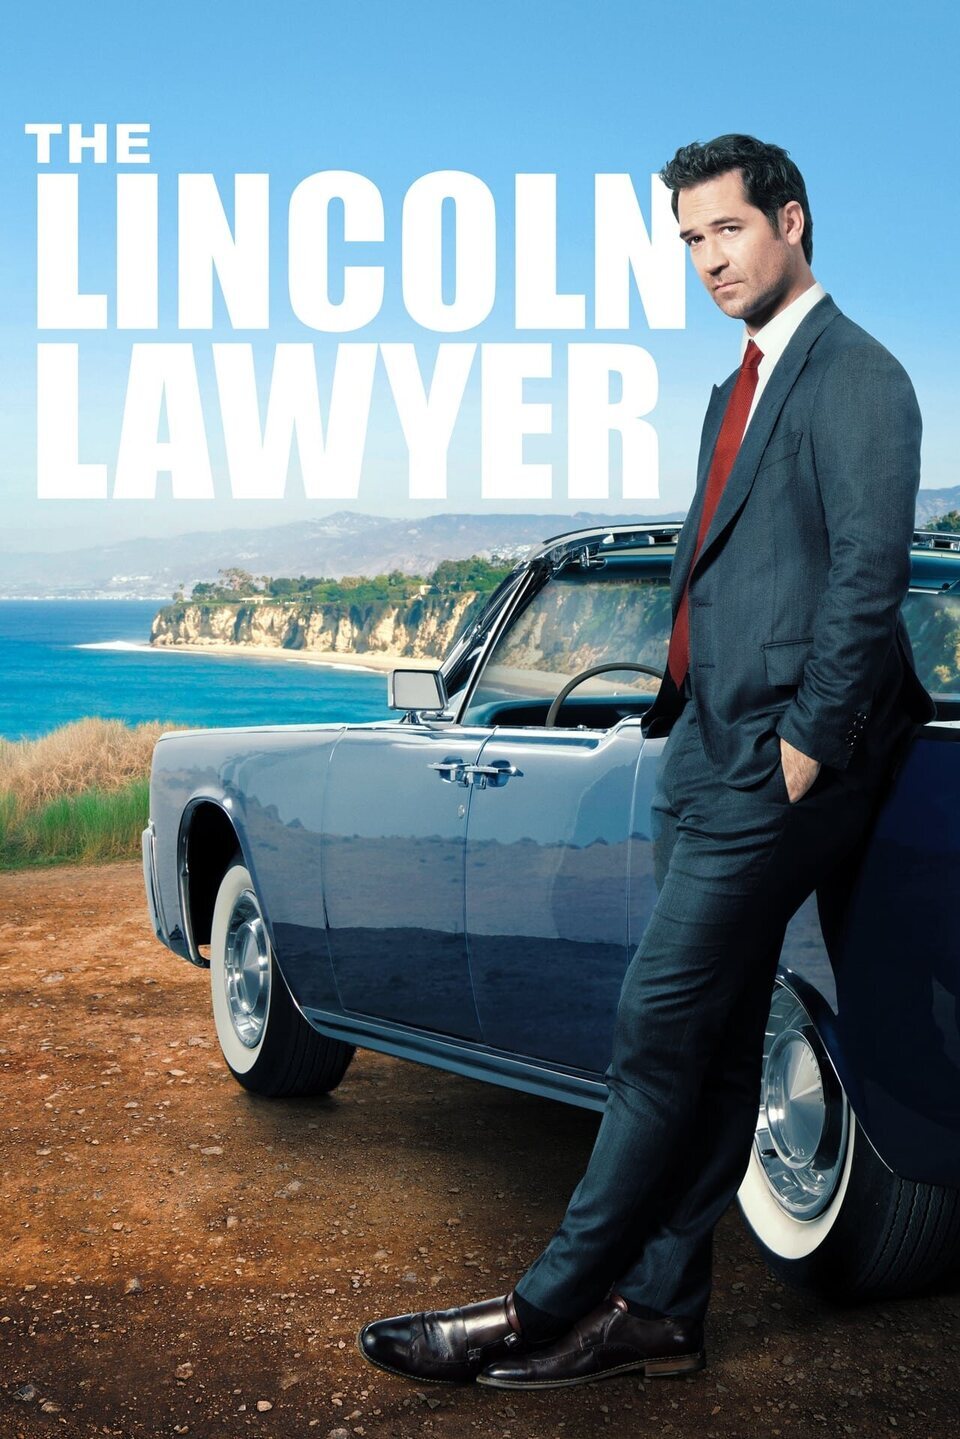 Cartel de The Lincoln Lawyer - Temporada 1